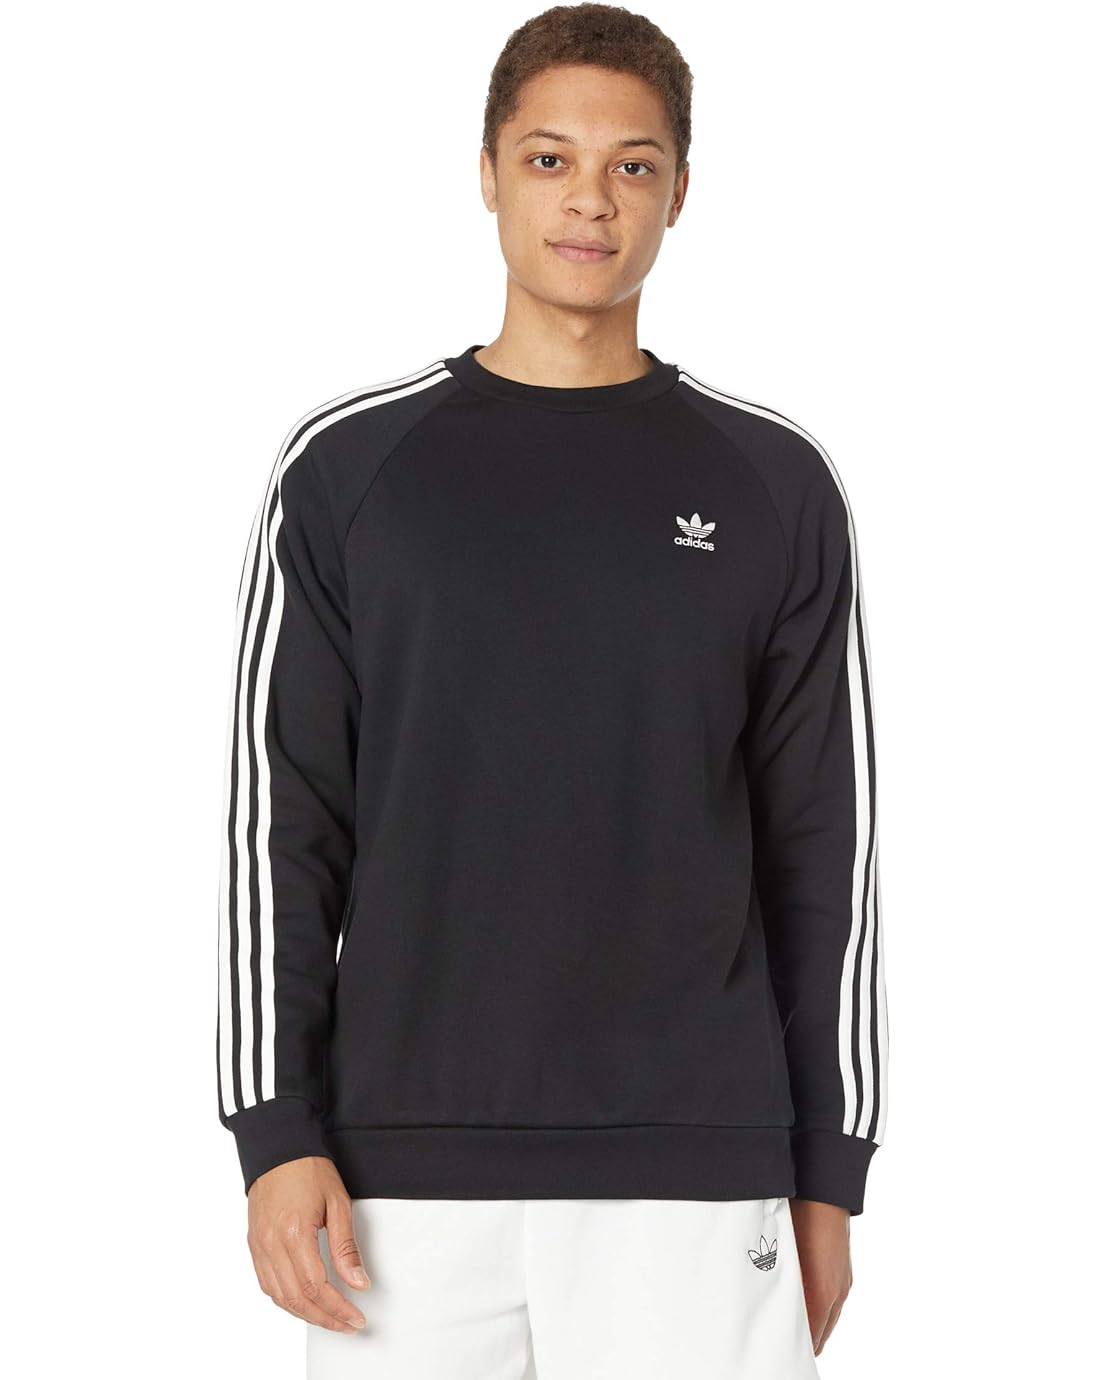 Adidas Originals 3-Stripes Long Sleeve Crew